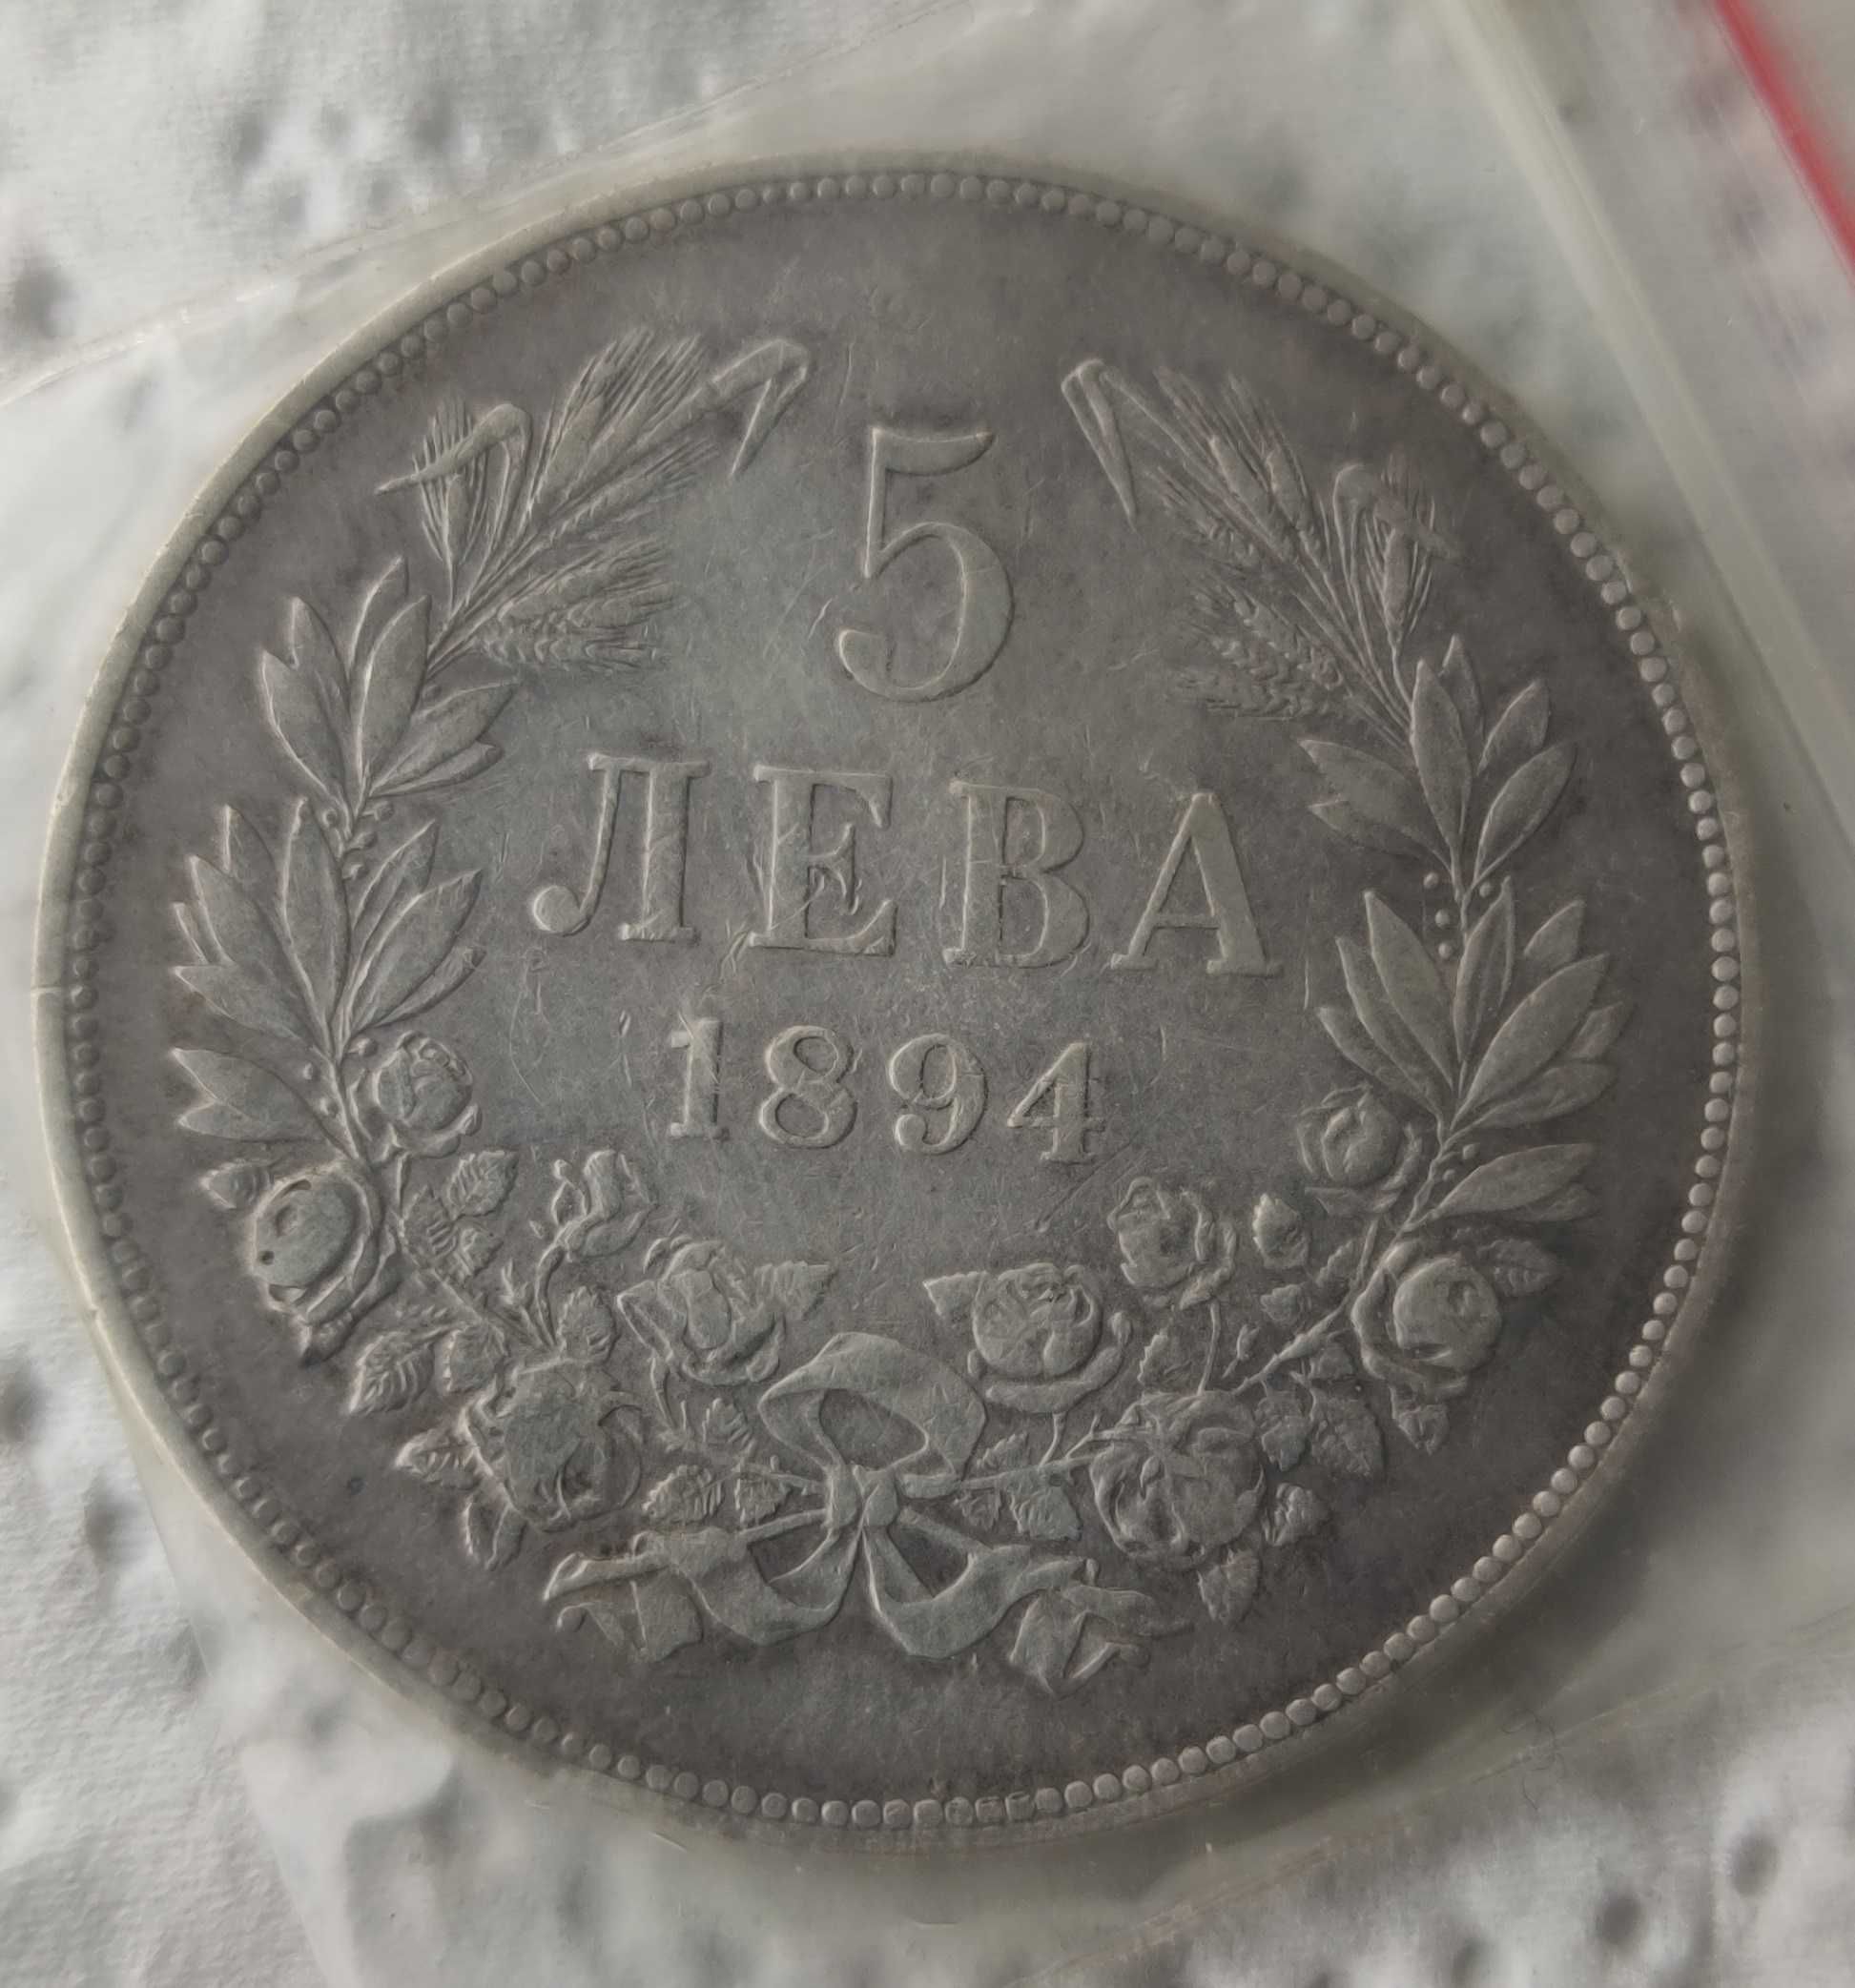 5 лева 1894 с клип в близък режим, линк в описанието